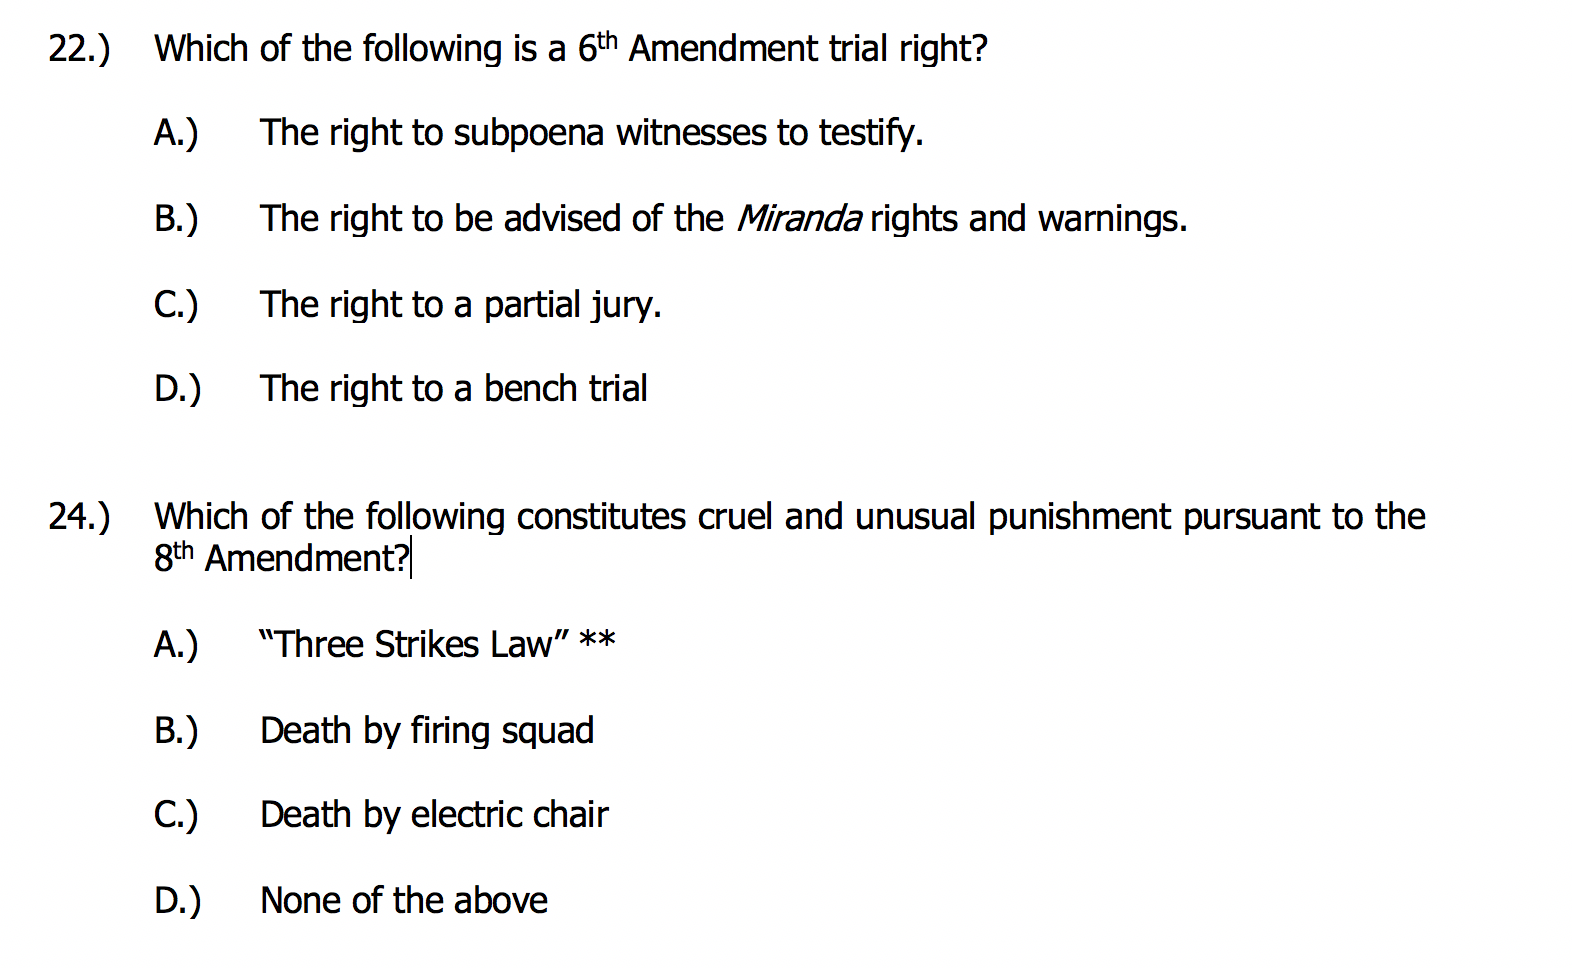 6th amendment